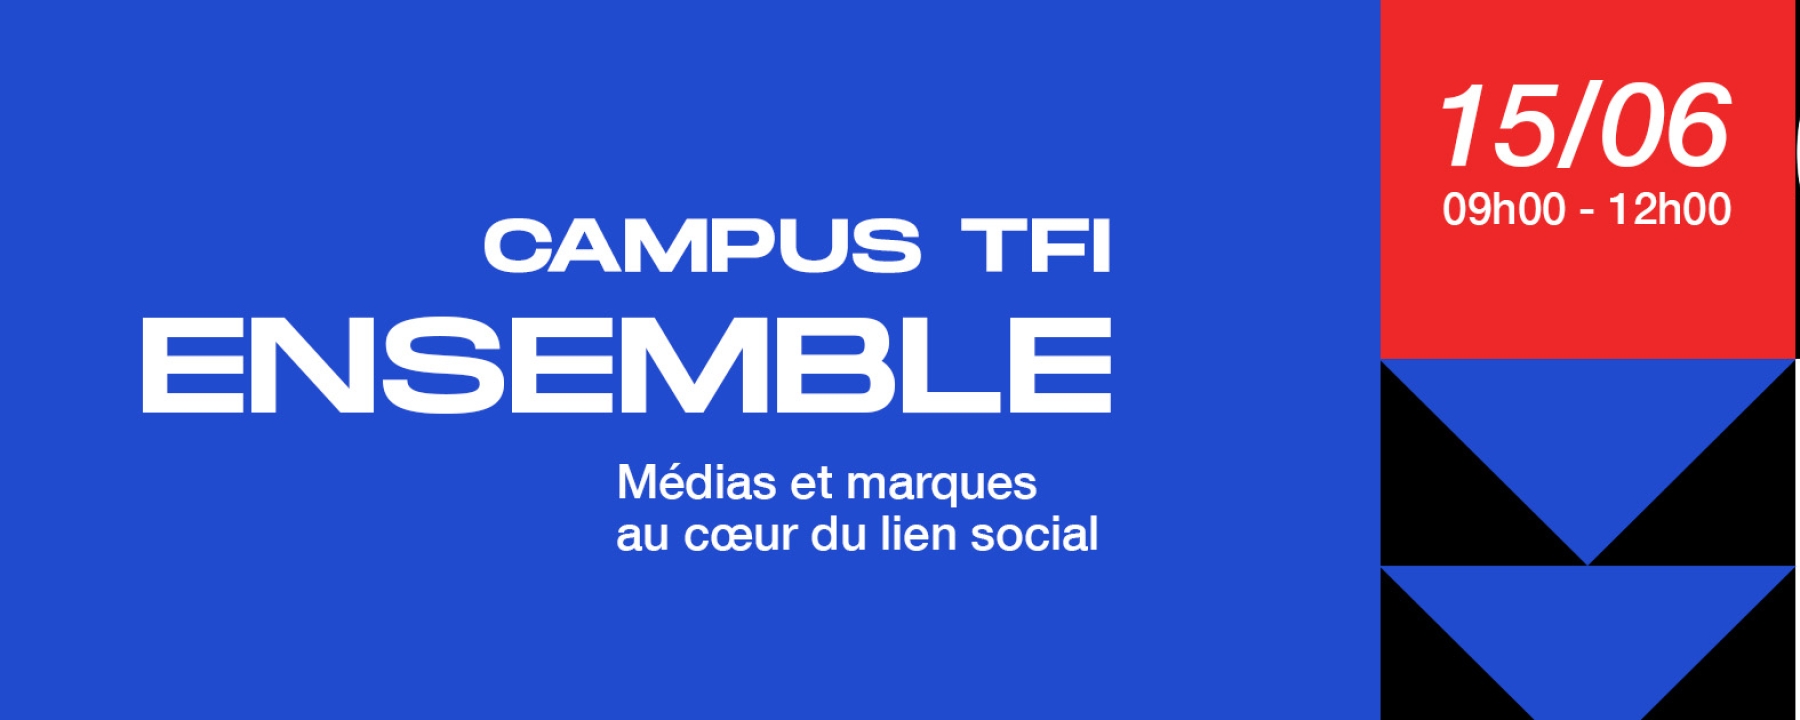 CAMPUS TF1 ENSEMBLE